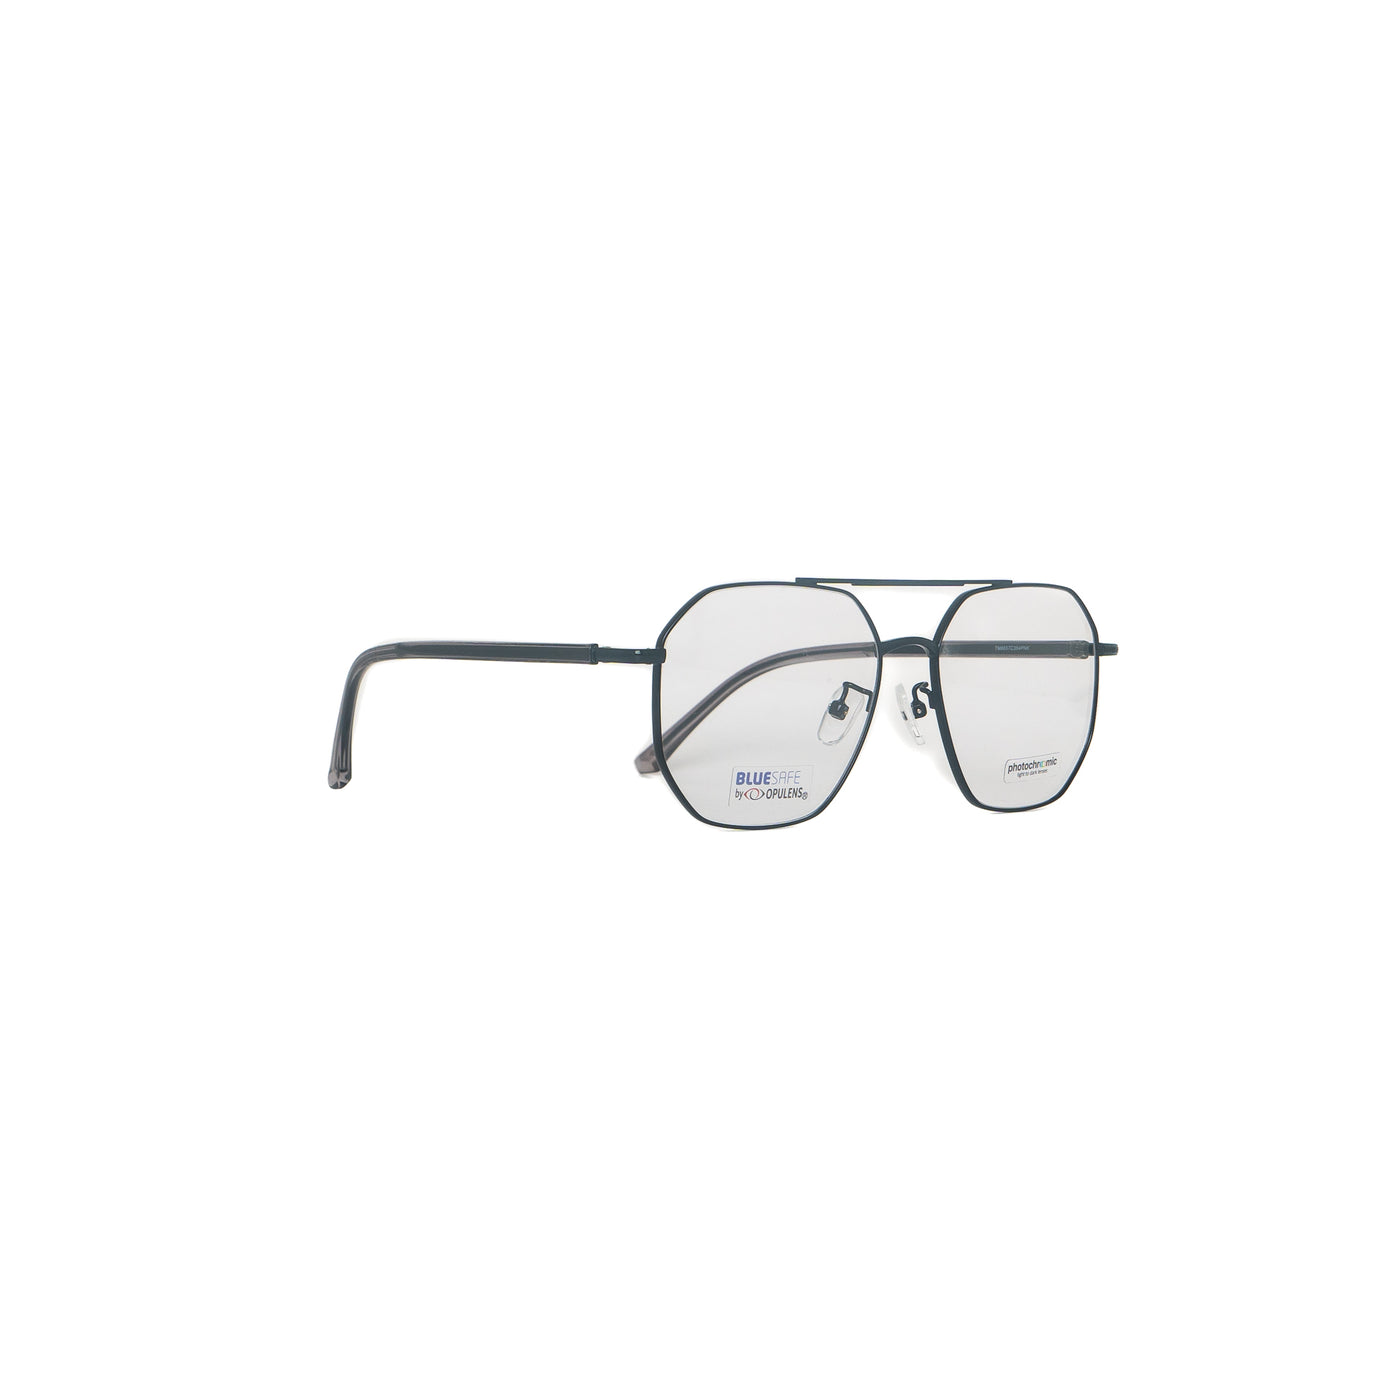 Tony Morgan TM8657C354PNK | Eyeglasses - Vision Express Optical Philippines